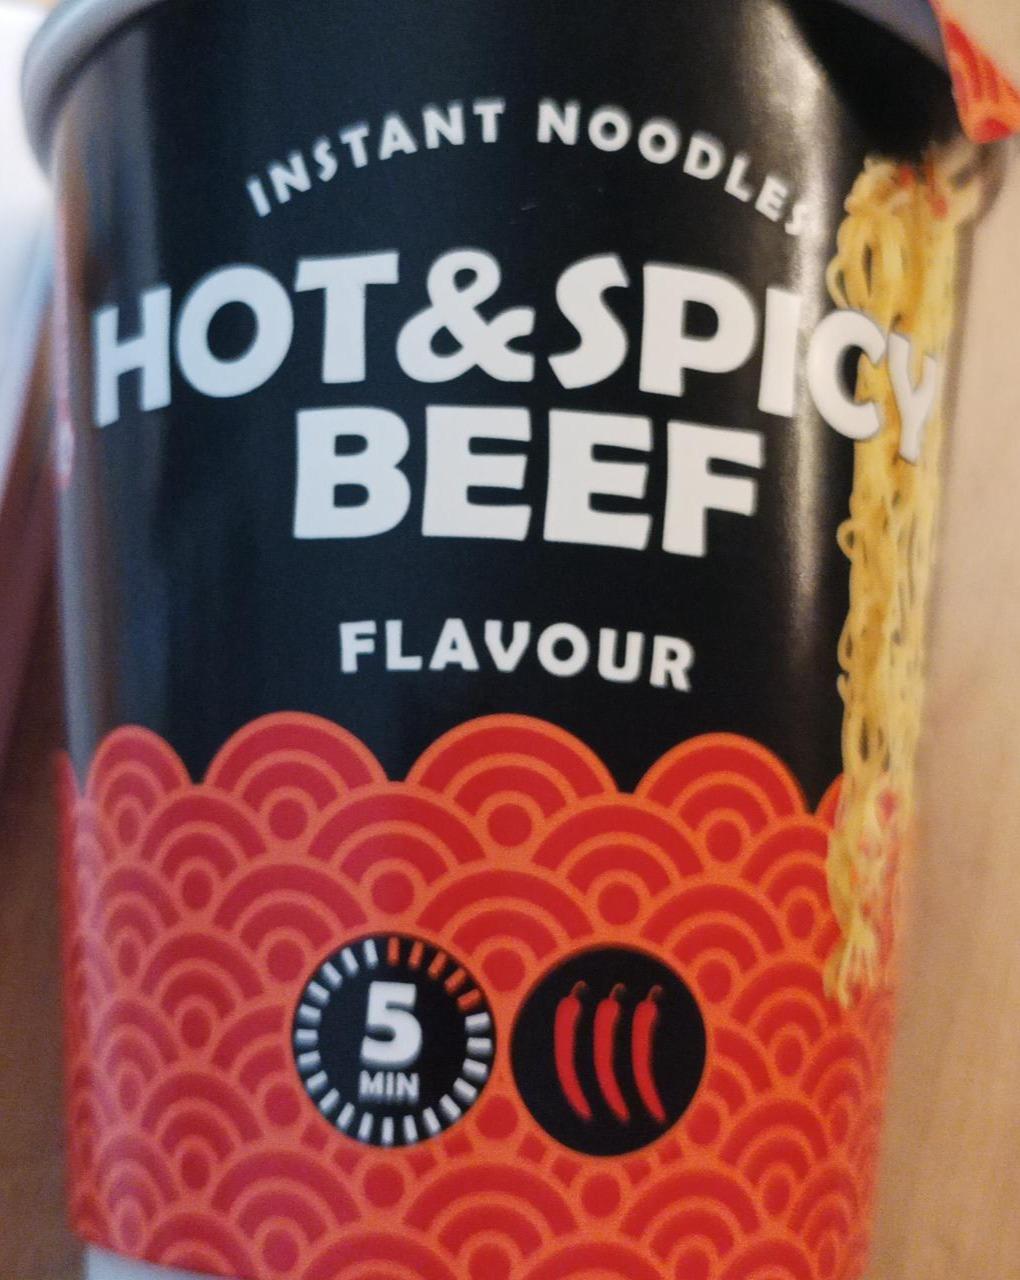 Fotografie - Instant Noodles Hot&Spicy Beef Flavour